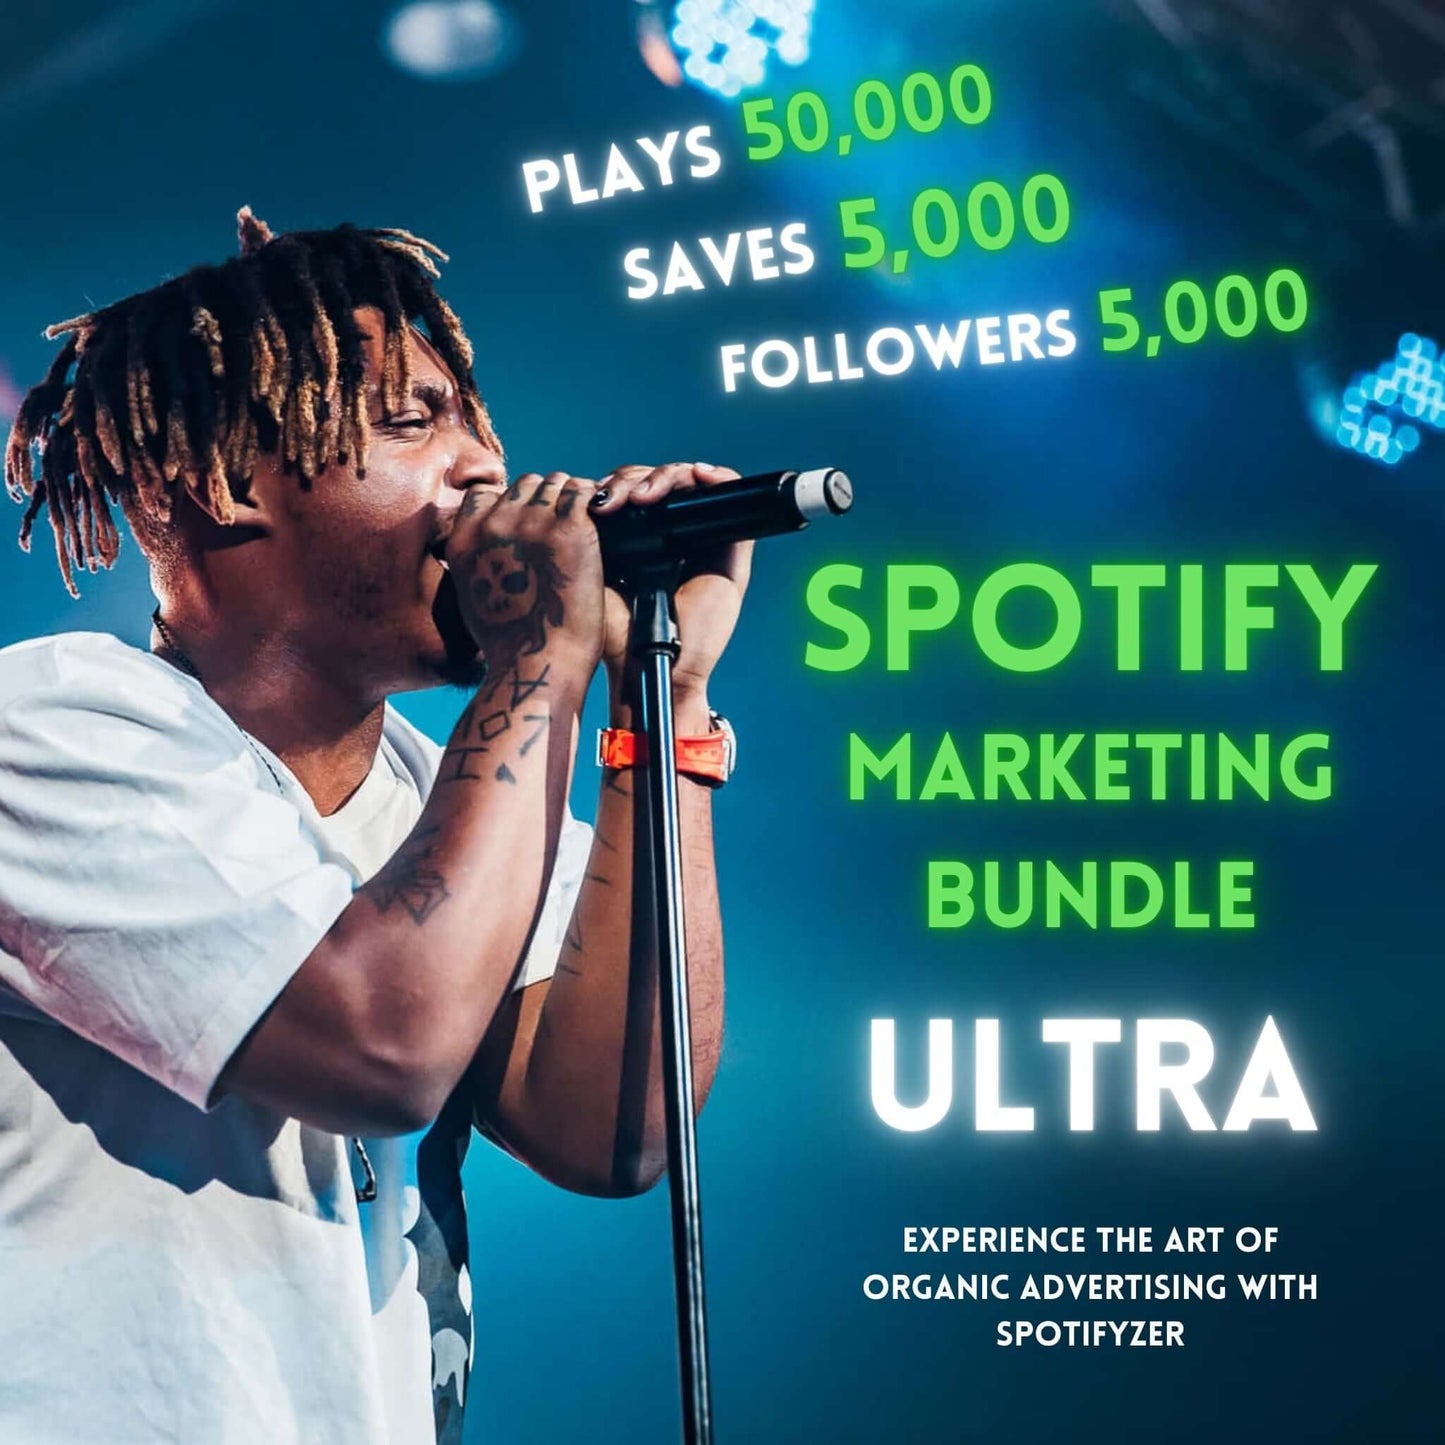 Spotify Marketing Bundle - ALL IN ONE